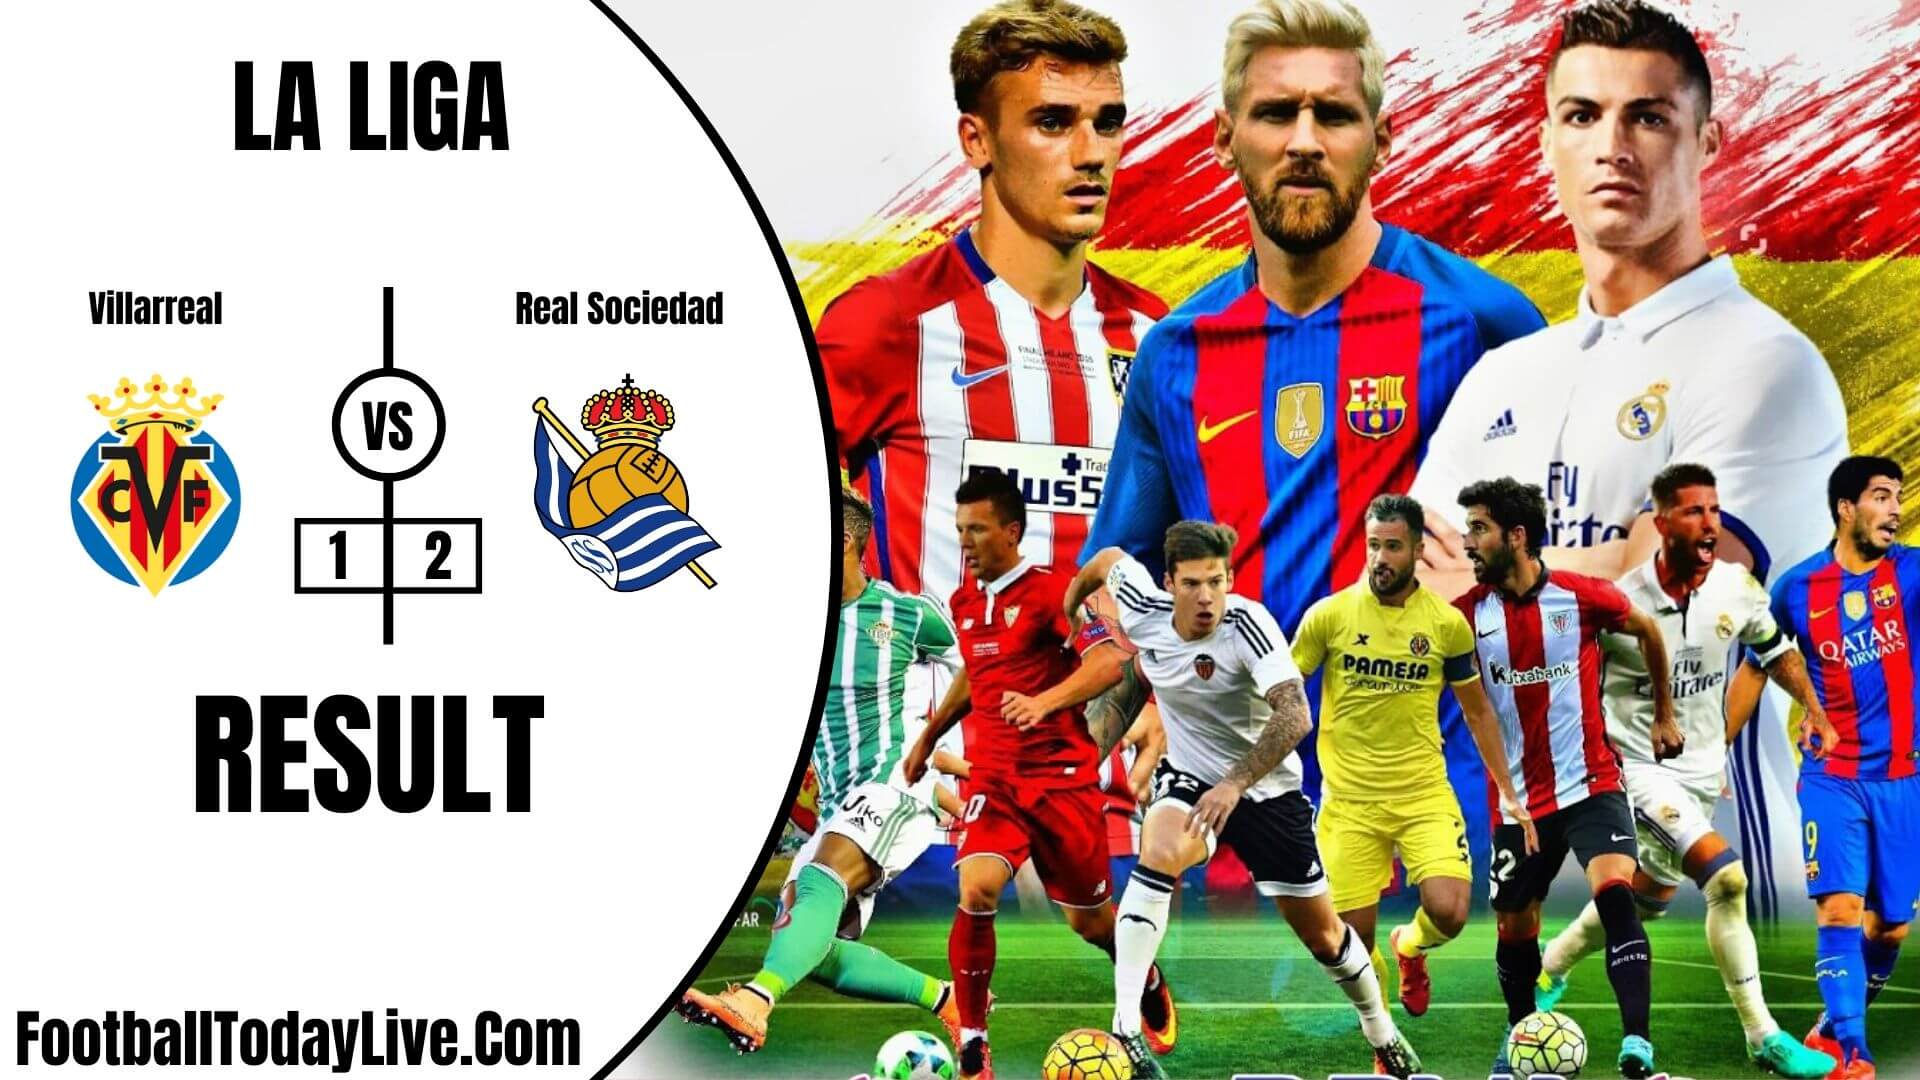 Villarreal Vs Real Sociedad | La Liga Week 36 Result 2020